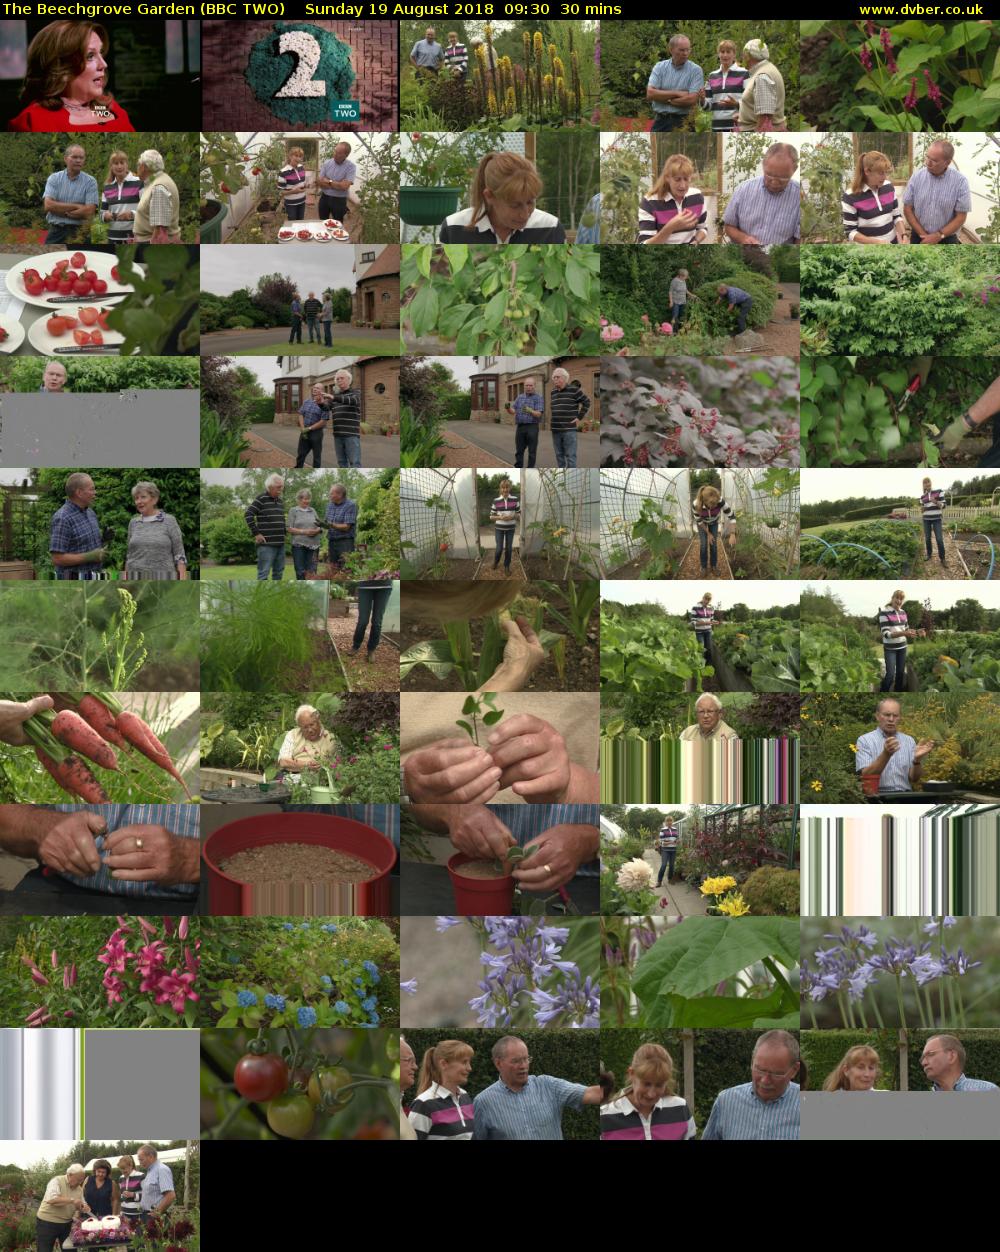 The Beechgrove Garden (BBC TWO) Sunday 19 August 2018 09:30 - 10:00